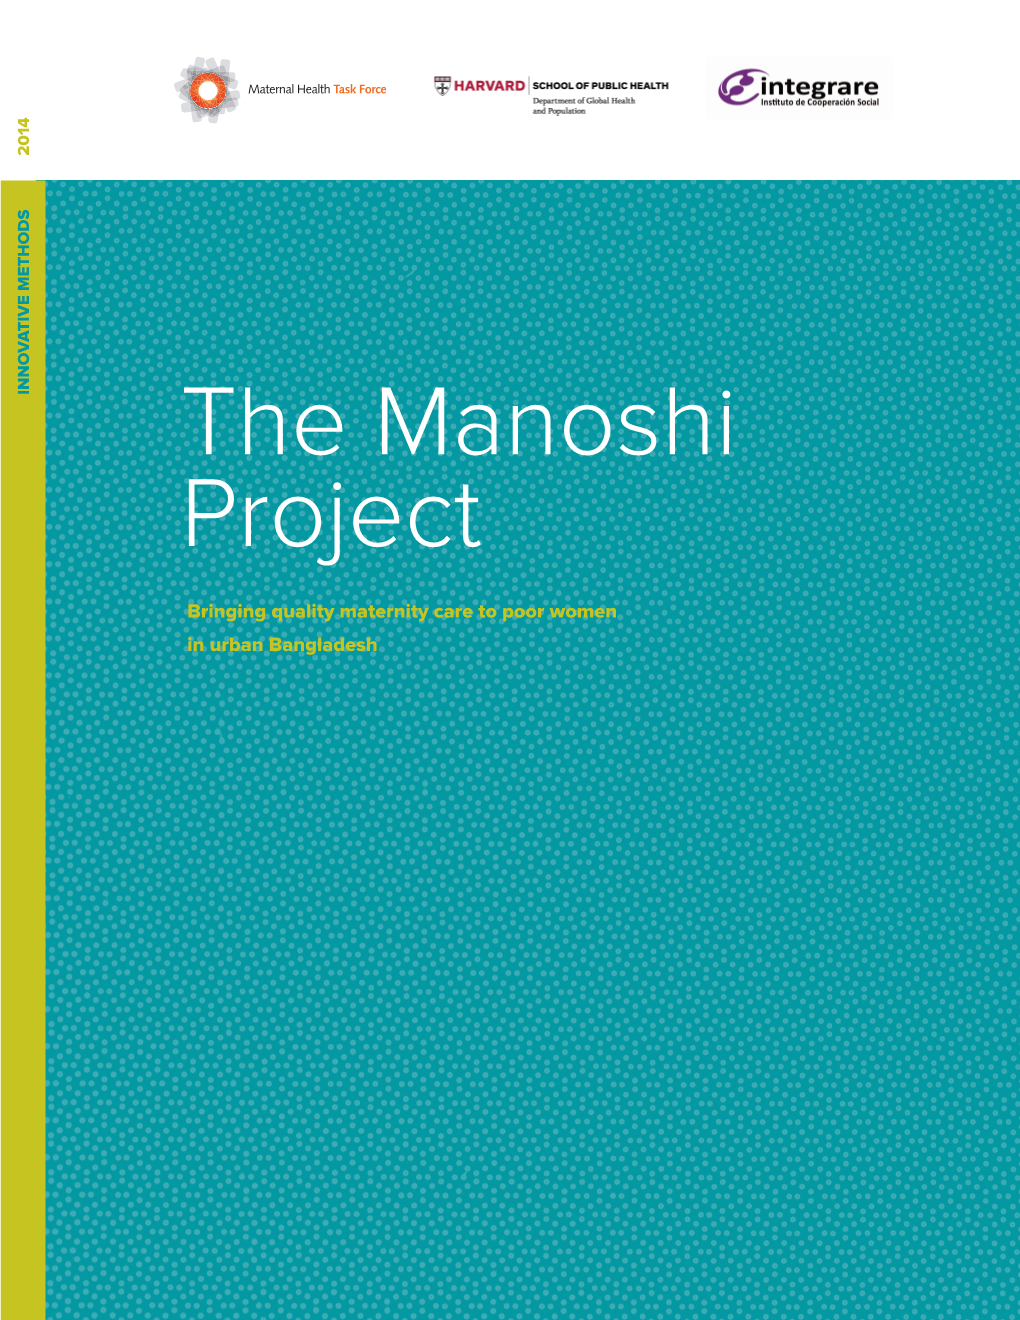 The Manoshi Project